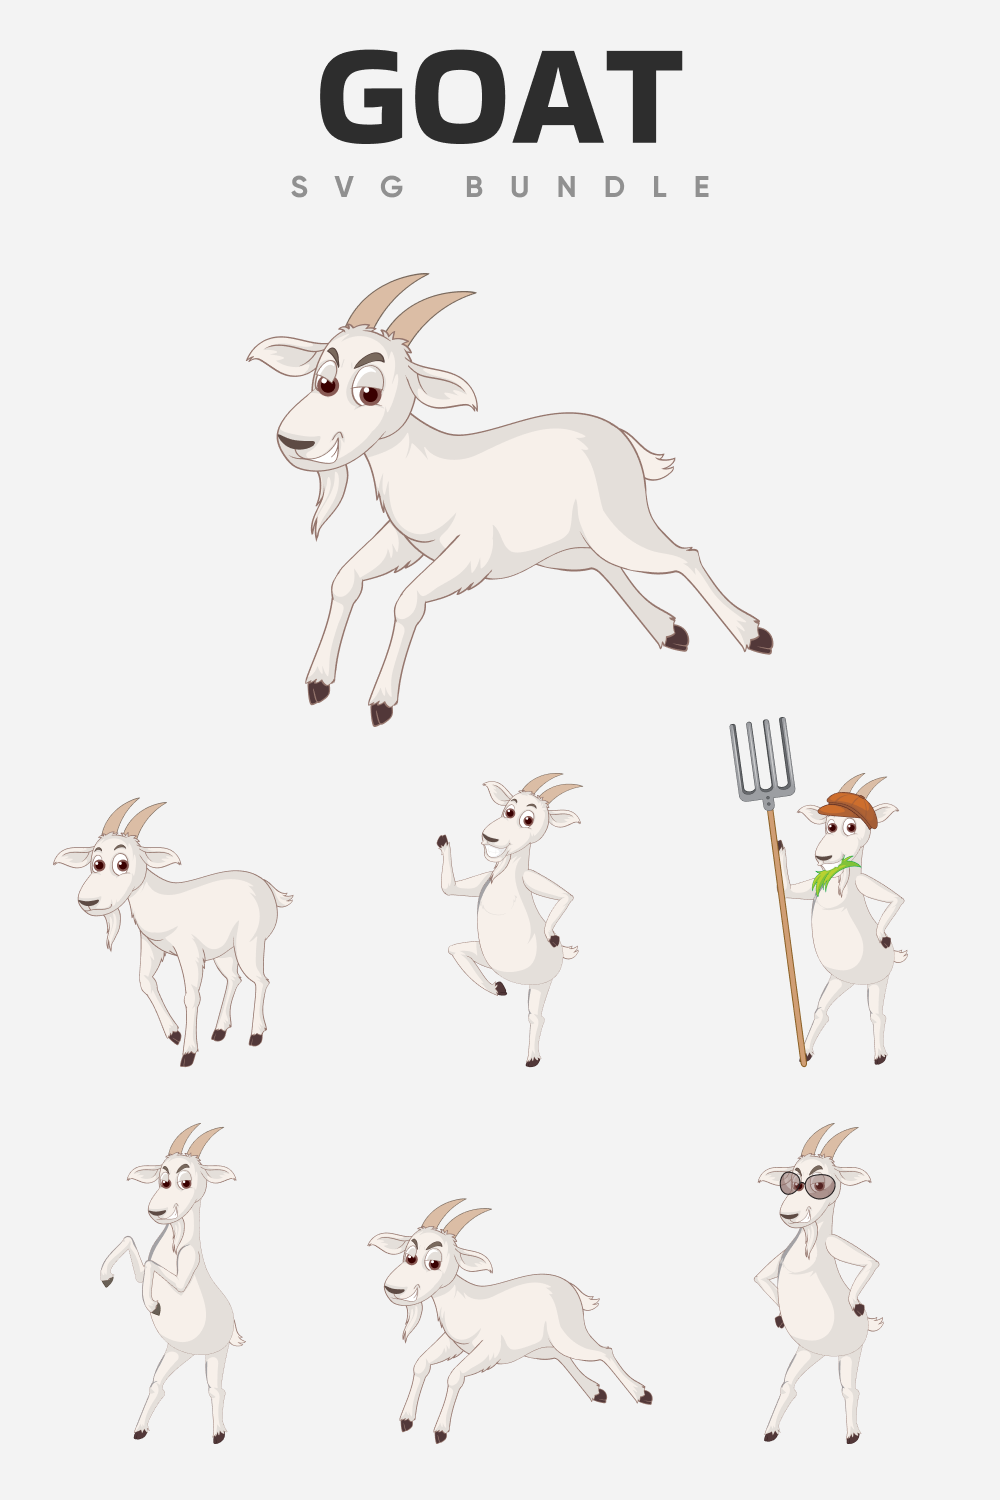 Goat SVG bundle.